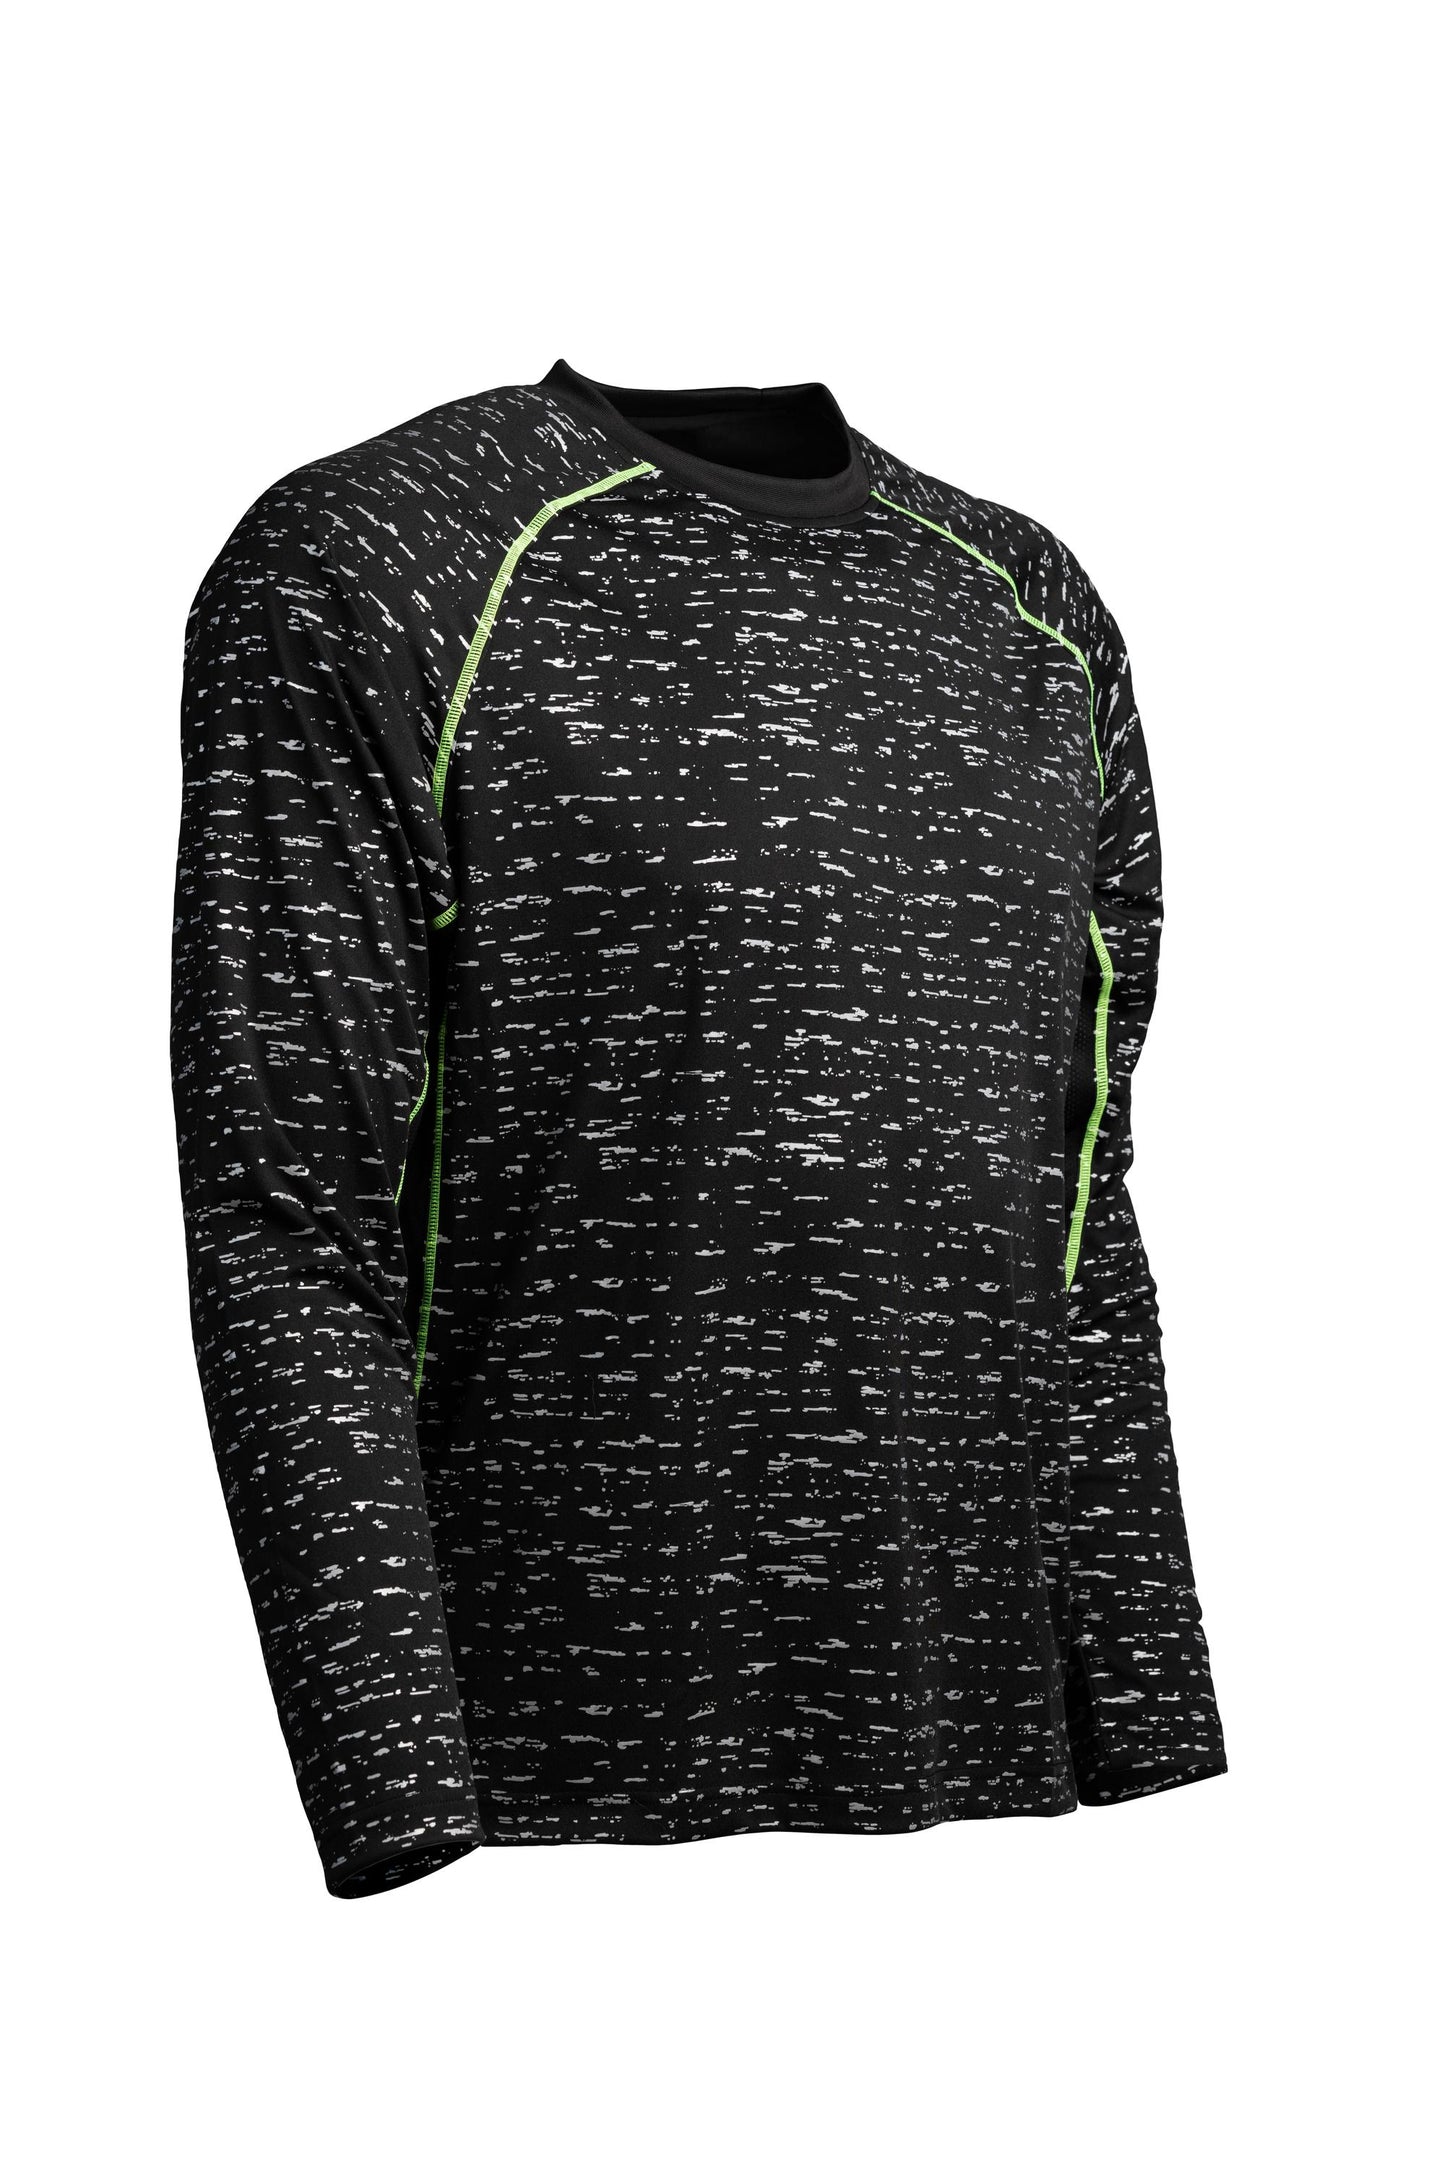 Men’s Black Long Sleeve WildSpark™ Athletic Shirt